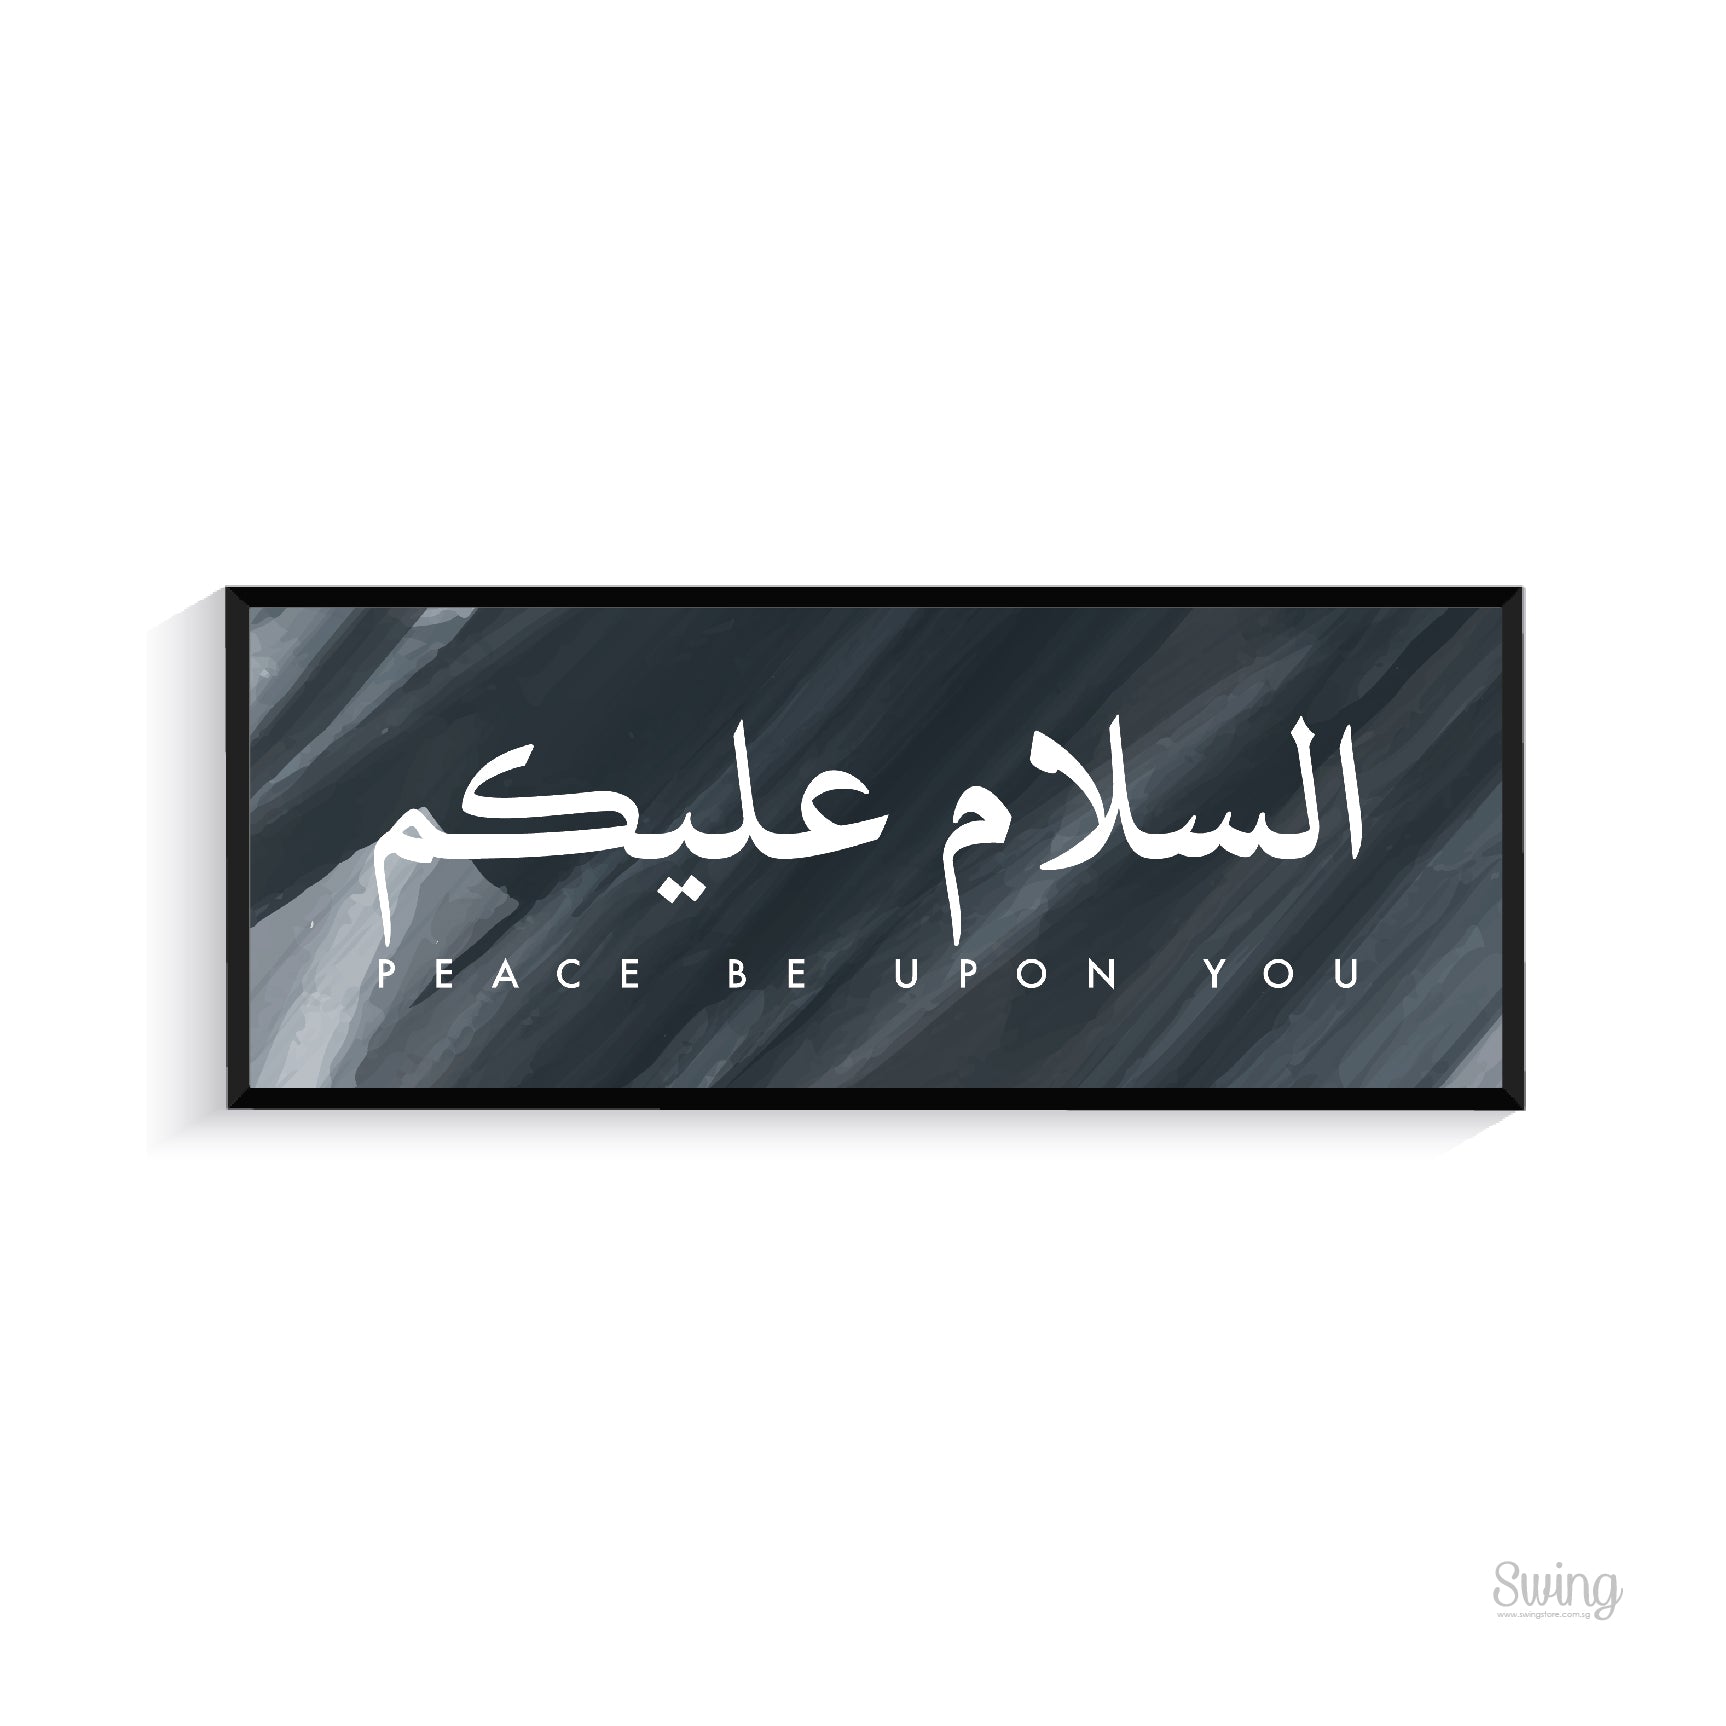 Salam Arabic in Grunge - Door Greeting Black Capping